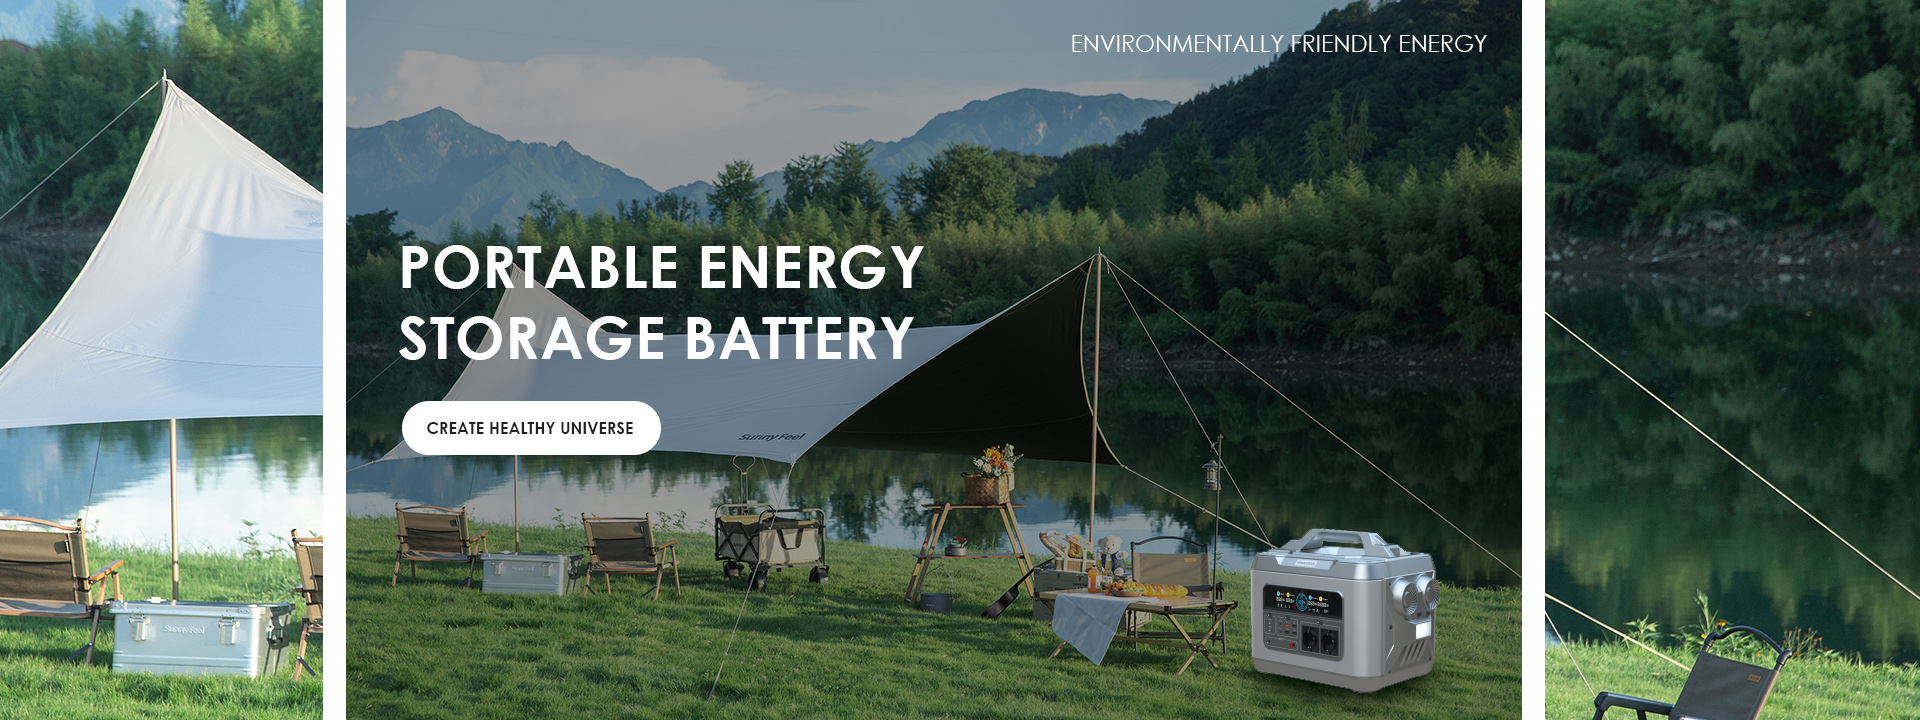 portable energy storage battery